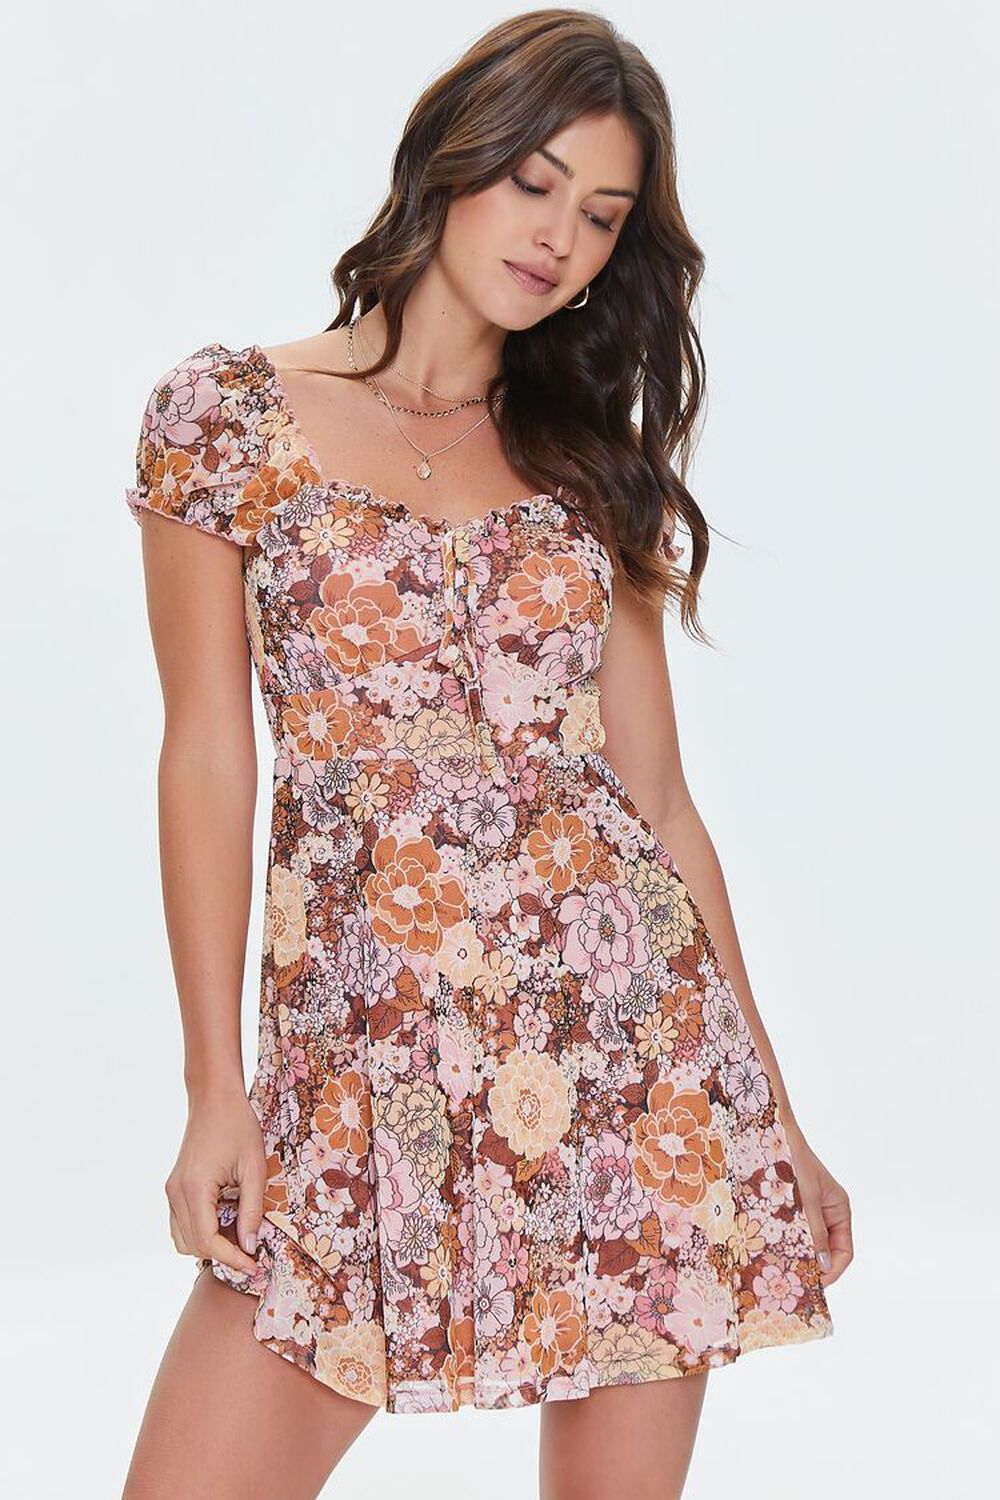 PINK/MULTI Floral Print Fit & Flare Mini Dress, image 1